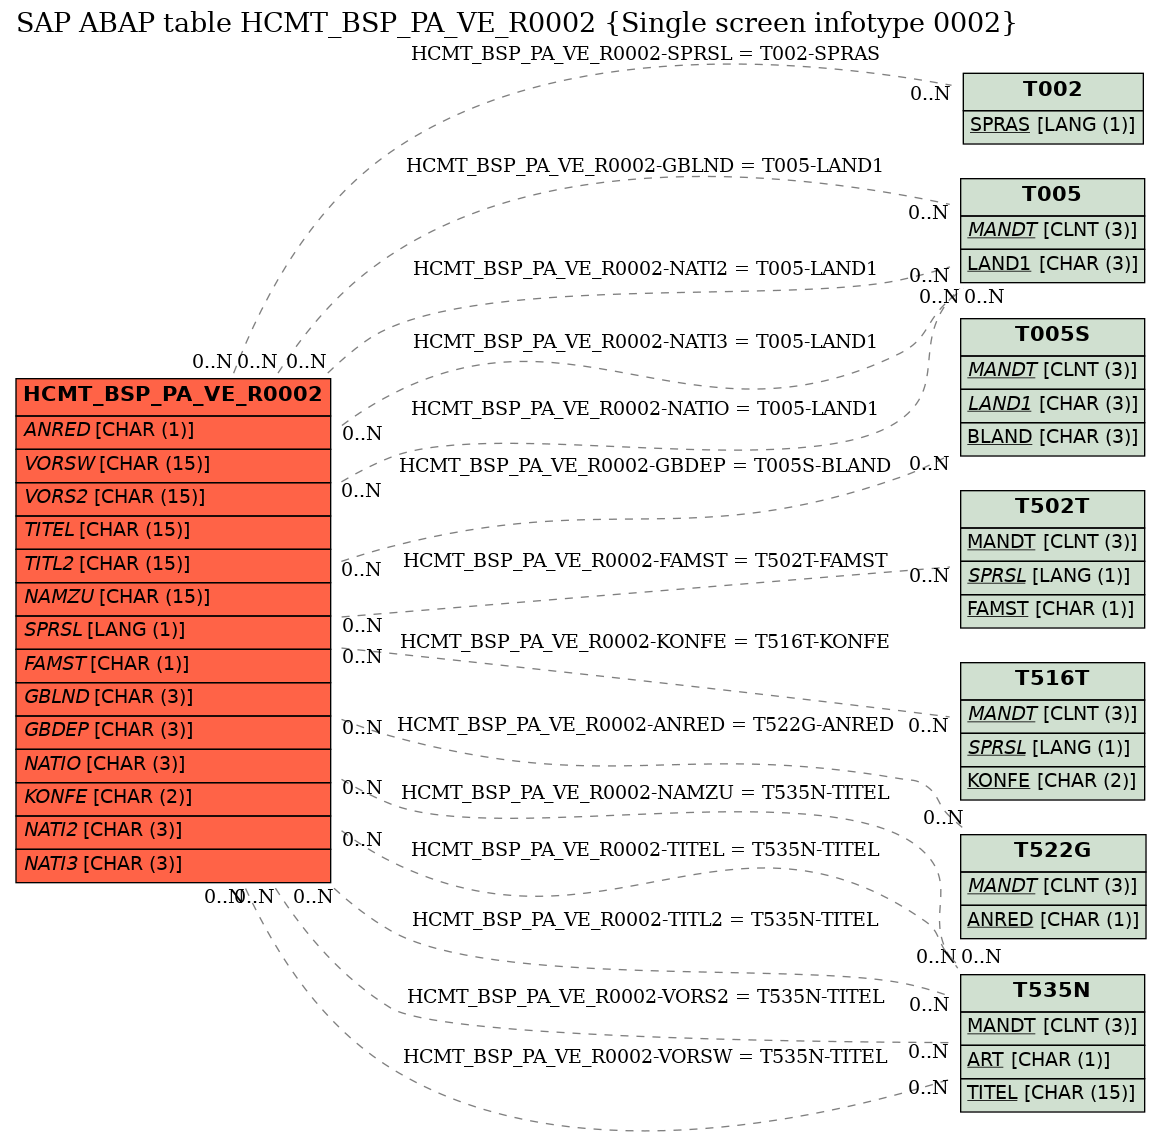 E-R Diagram for table HCMT_BSP_PA_VE_R0002 (Single screen infotype 0002)